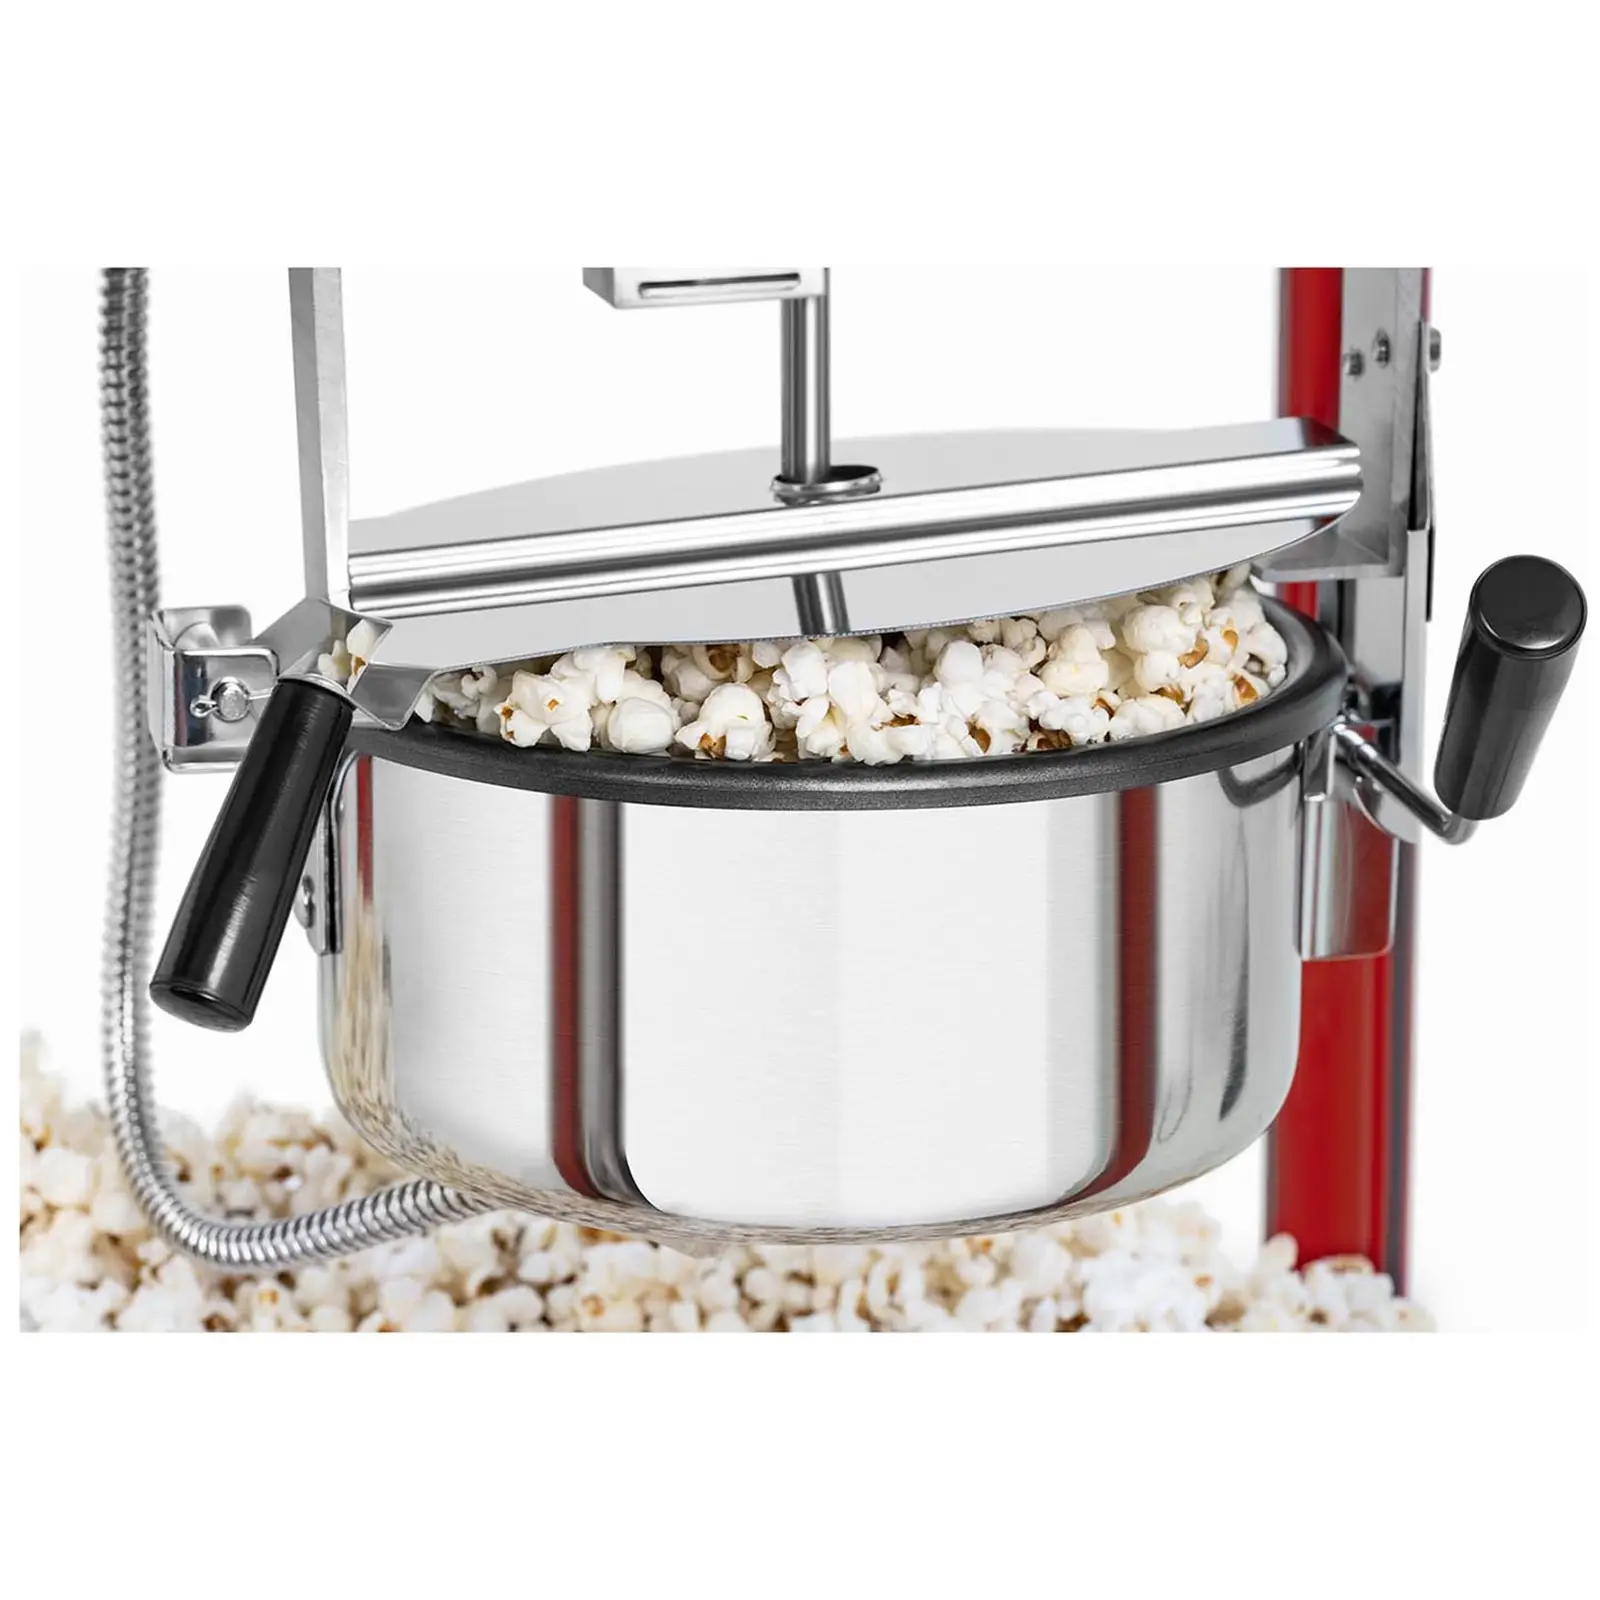 Popcorn maker - American design